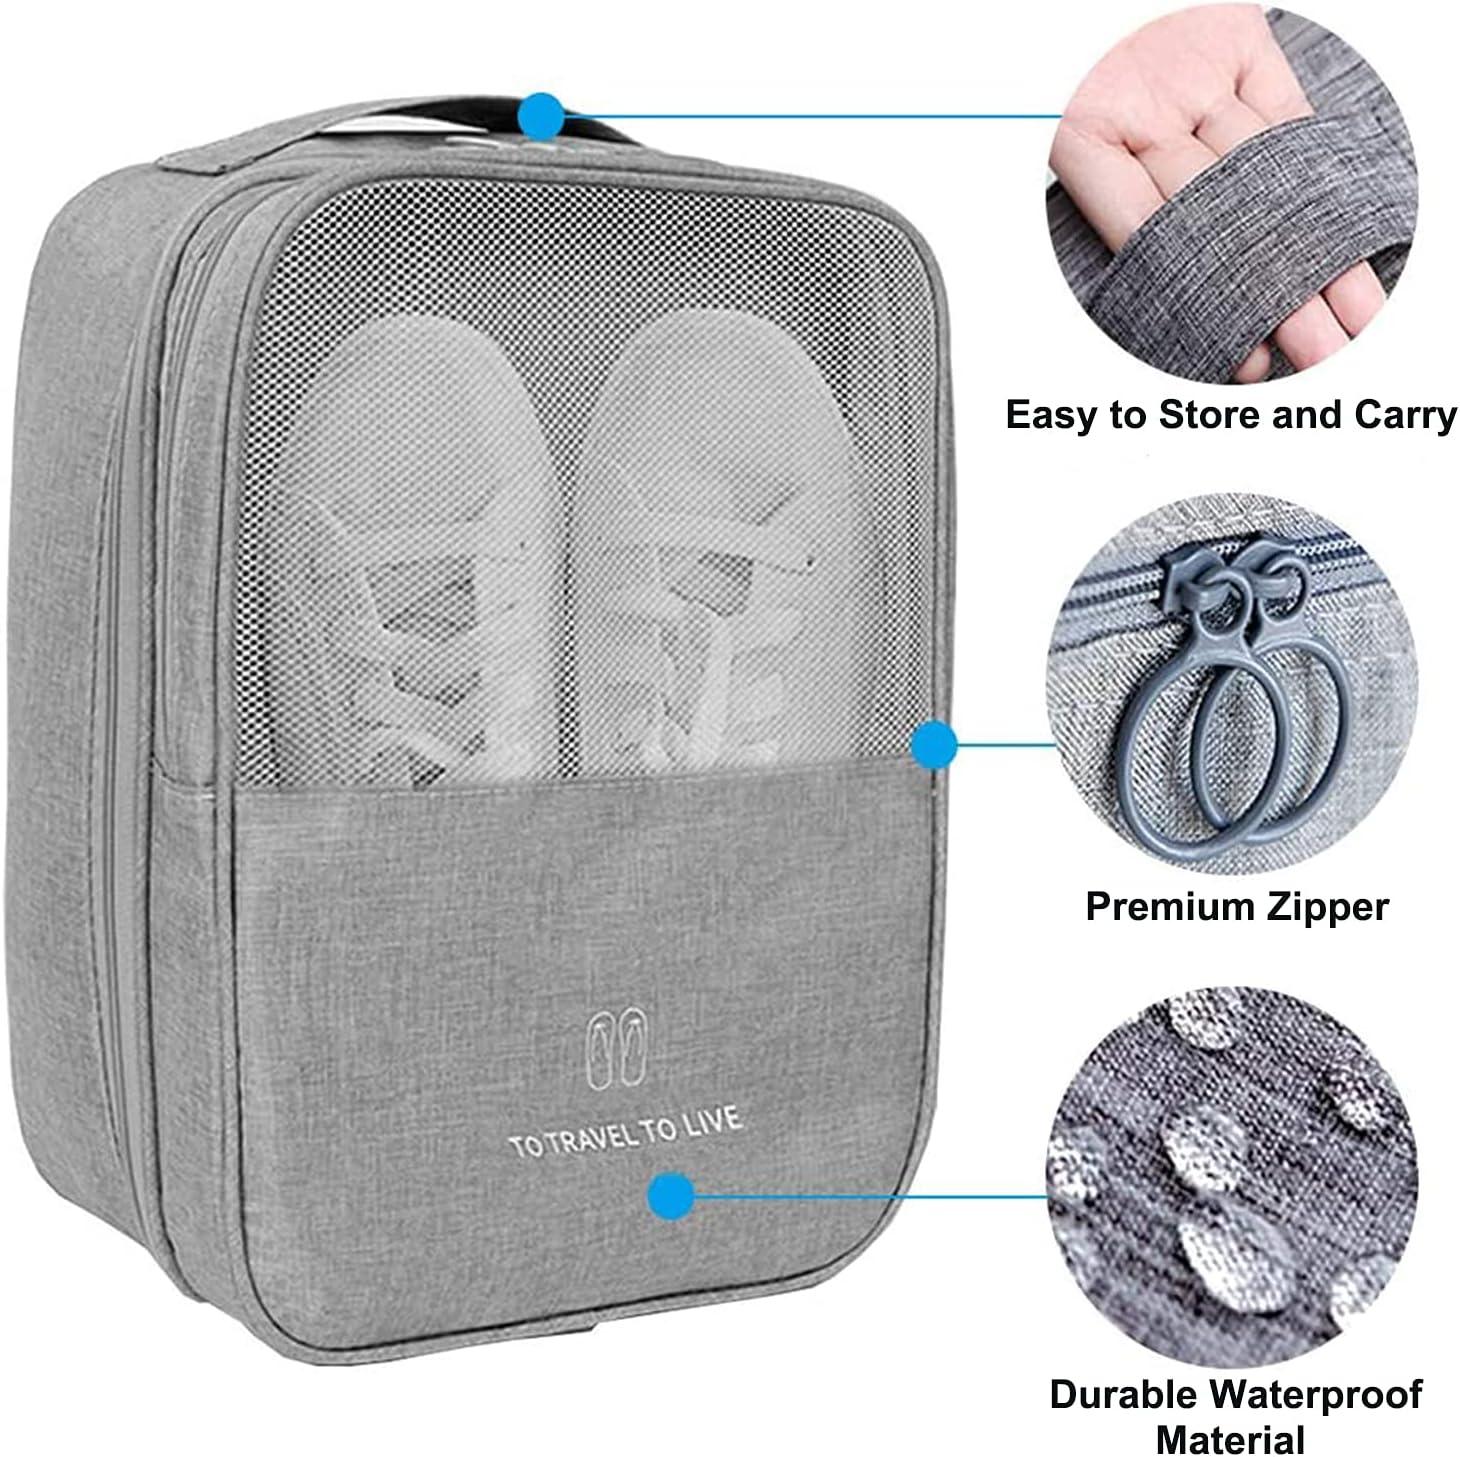 Shoe Bag for Travel, Portable Shoe Organizer, Storage